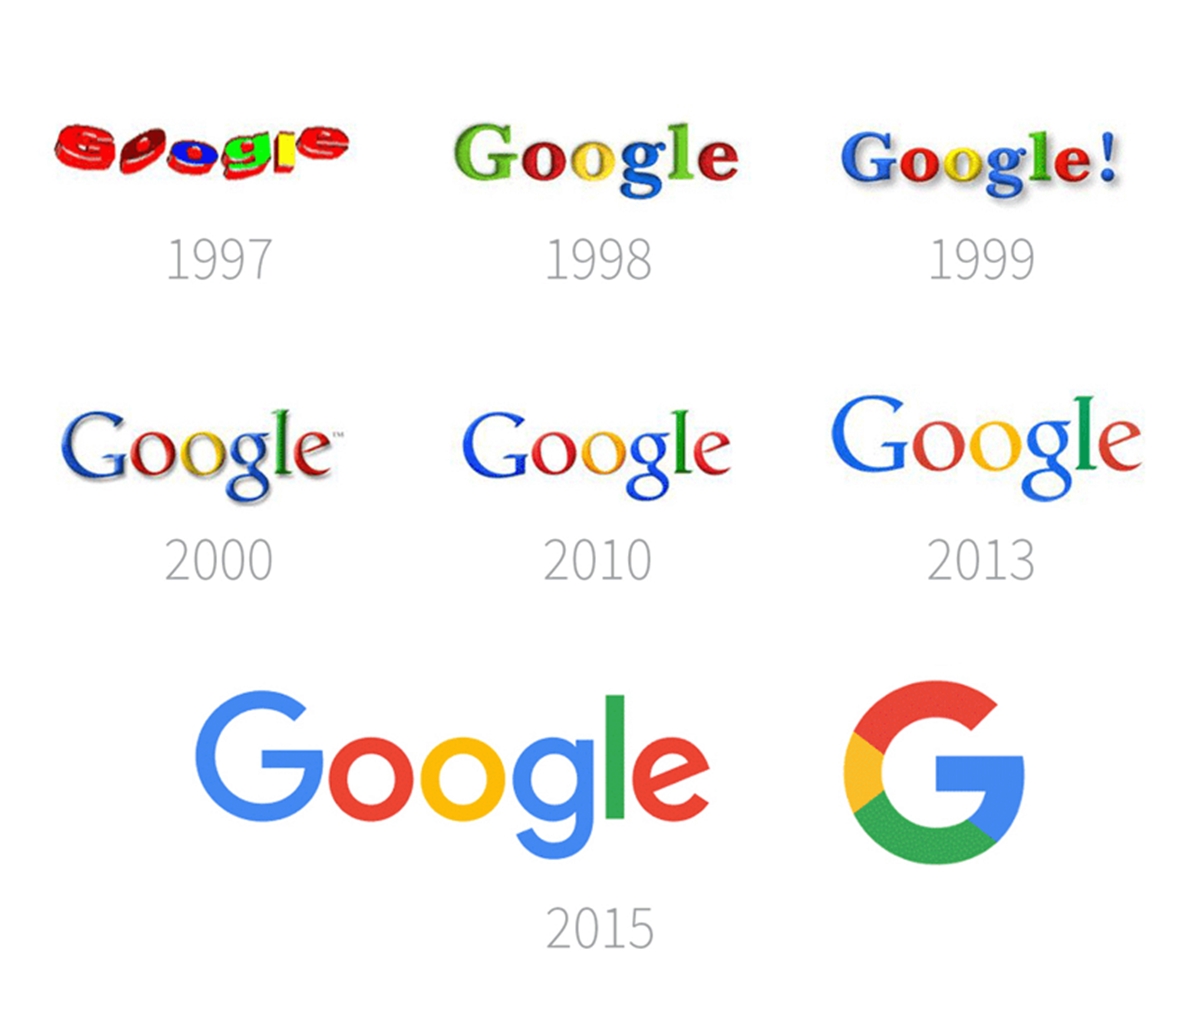 Google Updates their business logo